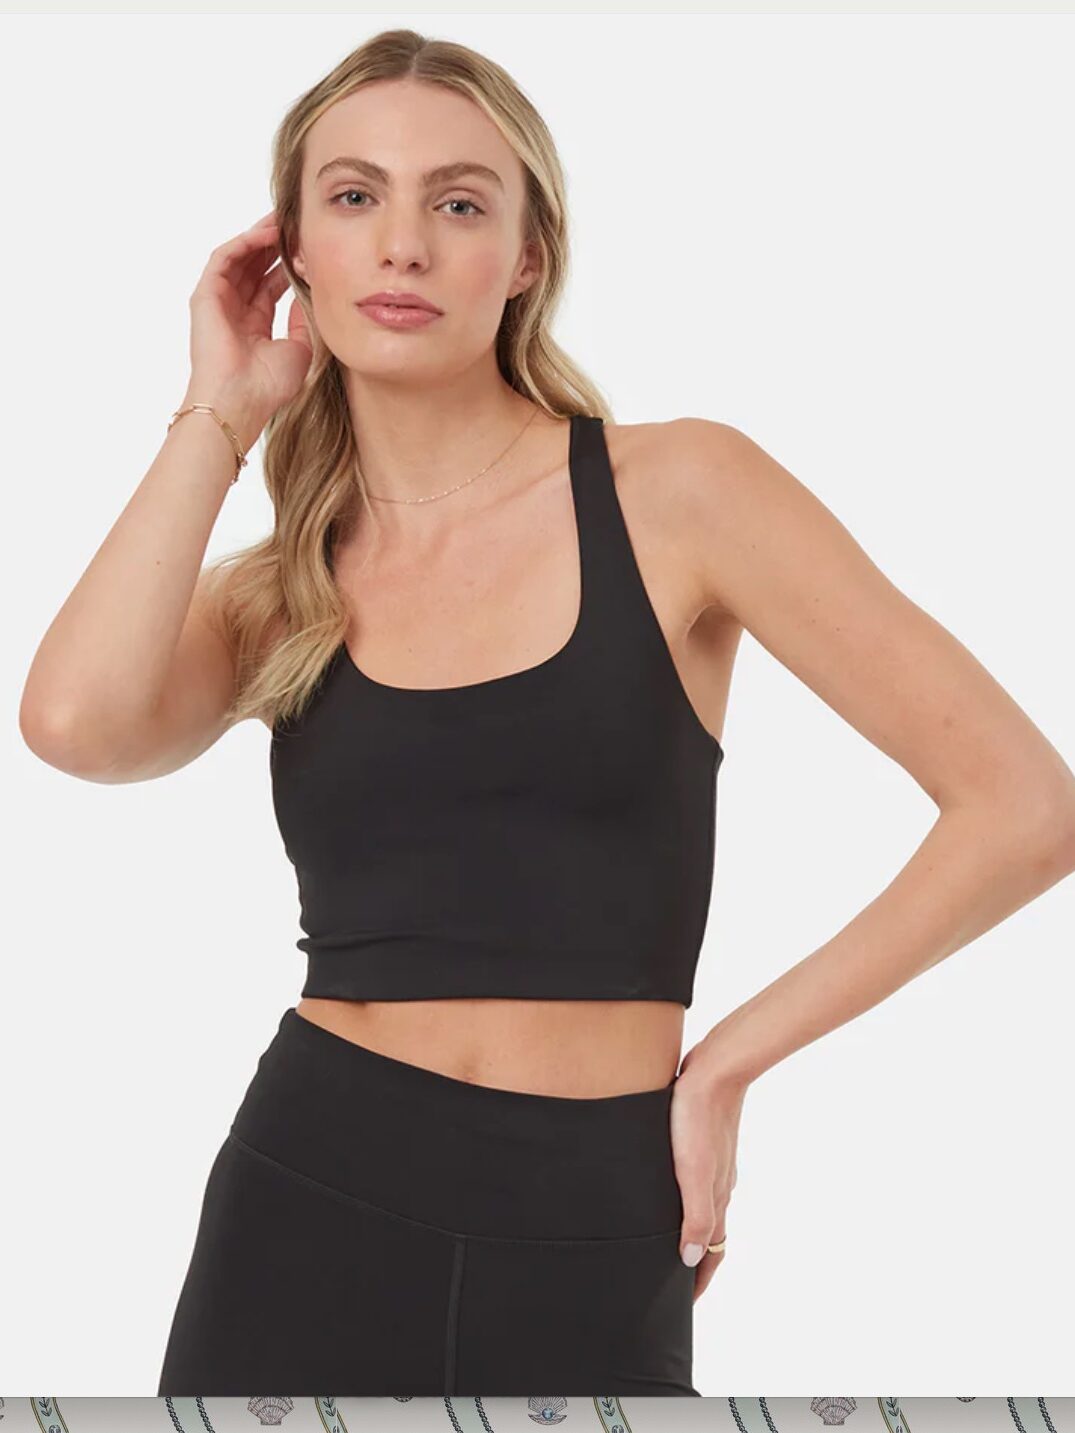 Model in matching black sports bra and leggings